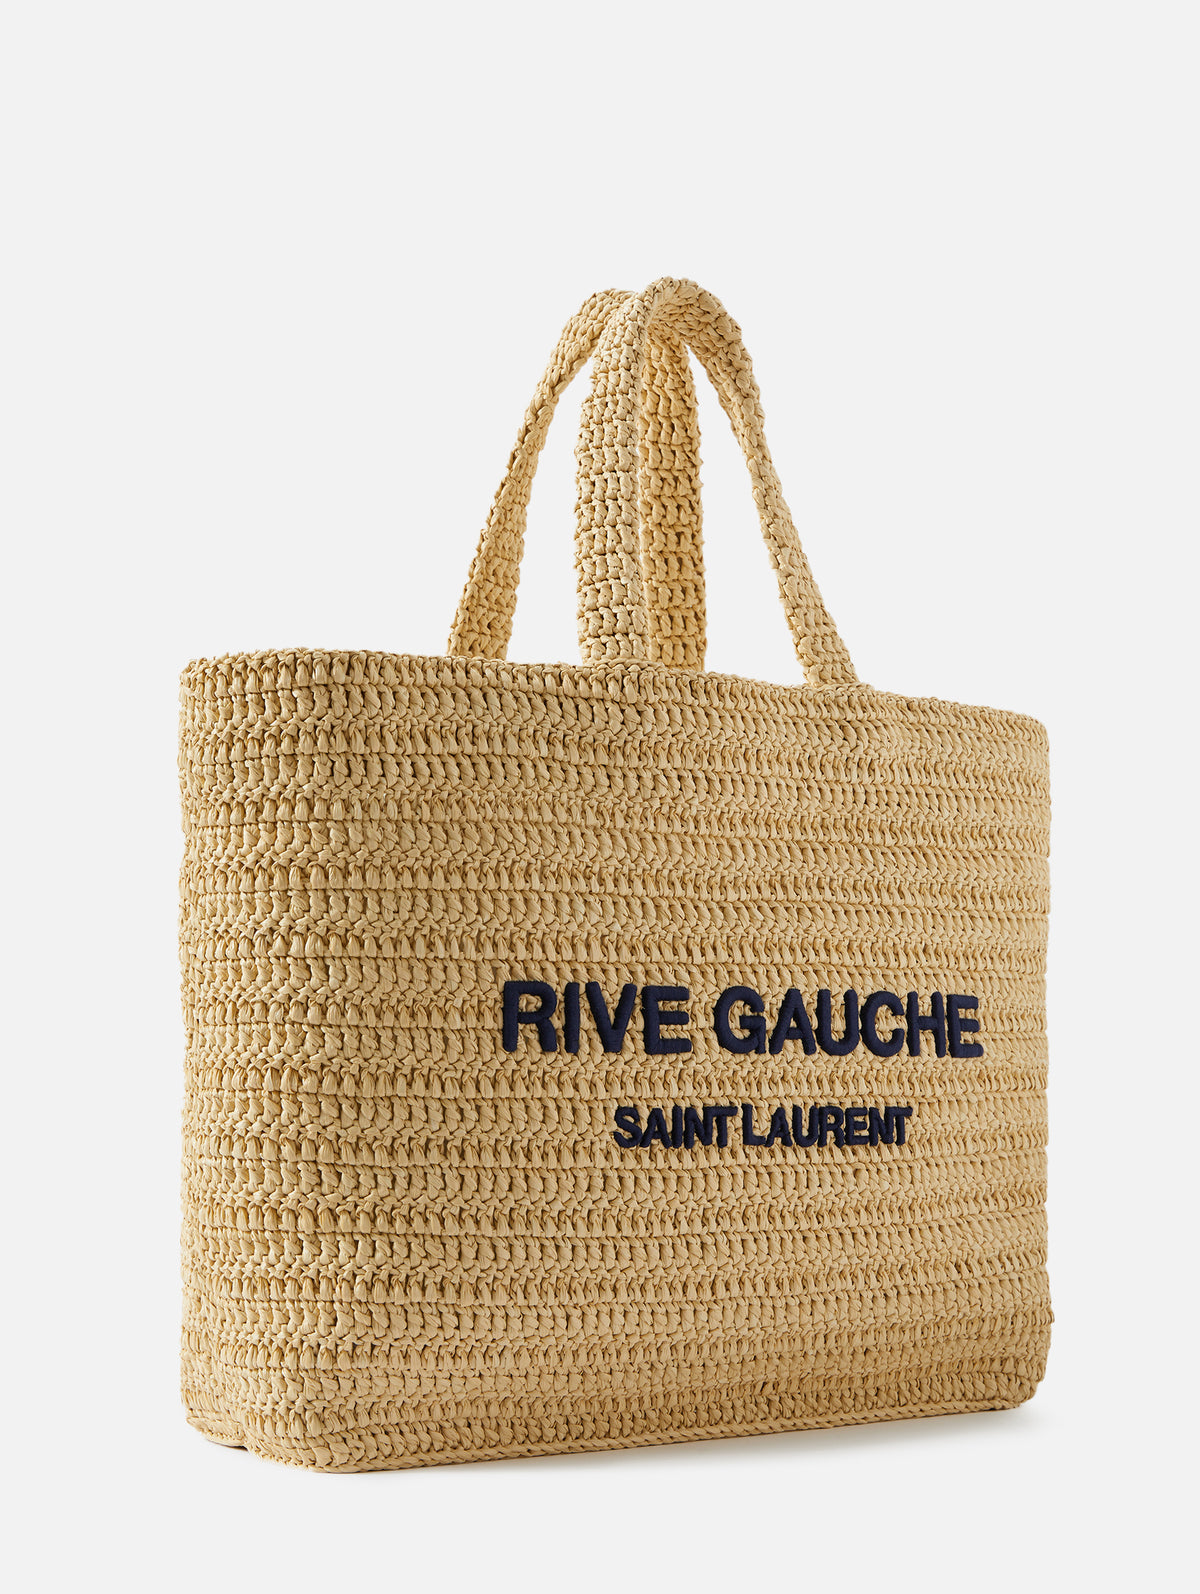 Saint Laurent Raffia Leather Bag in Natural